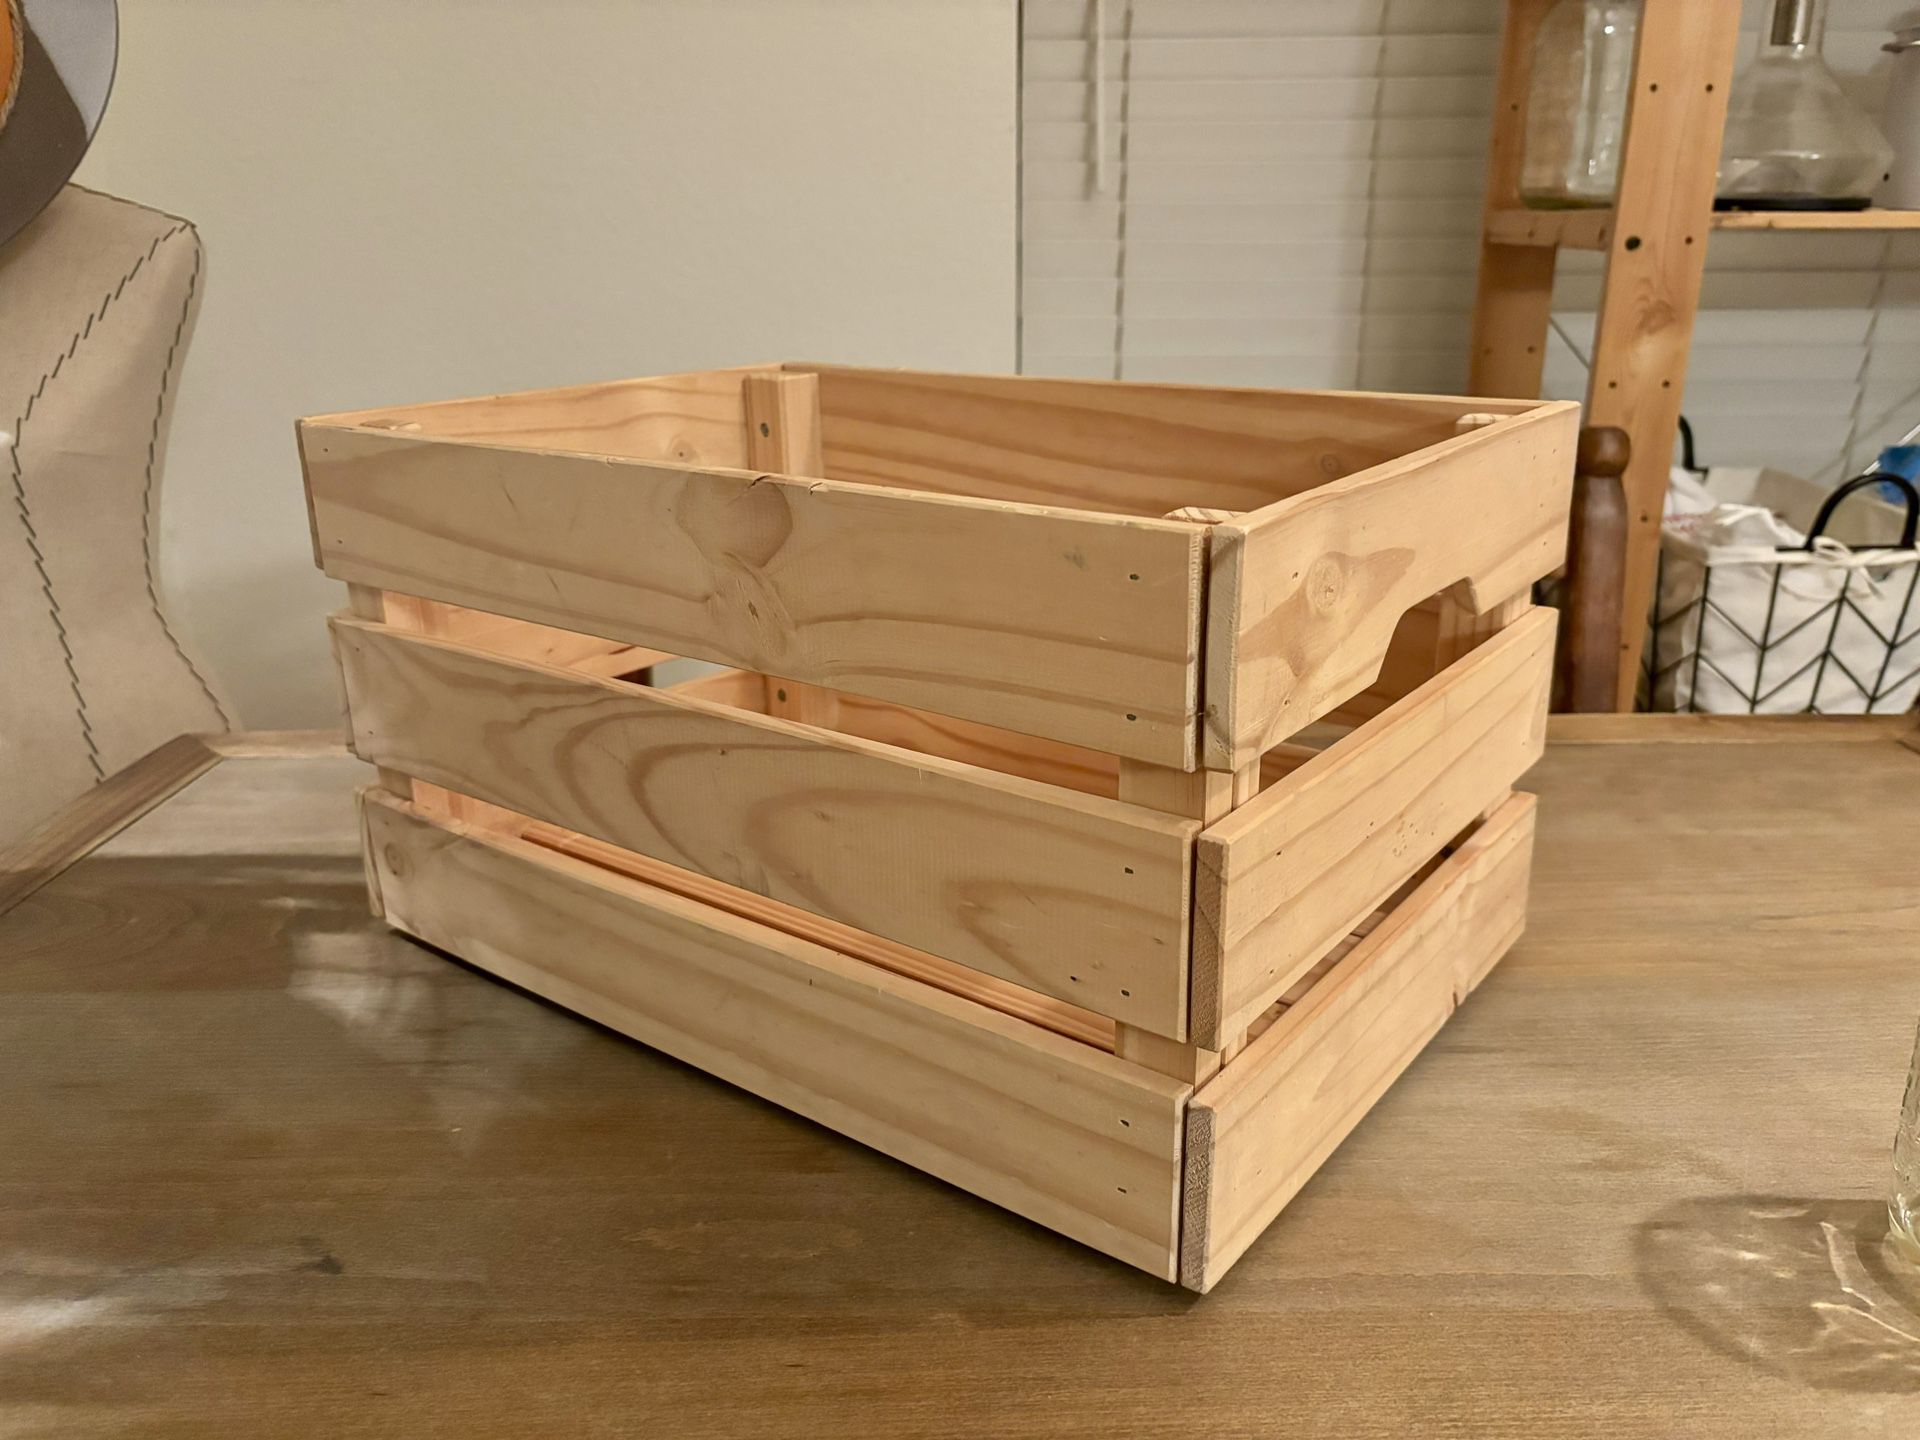 Apple Crate Wooden